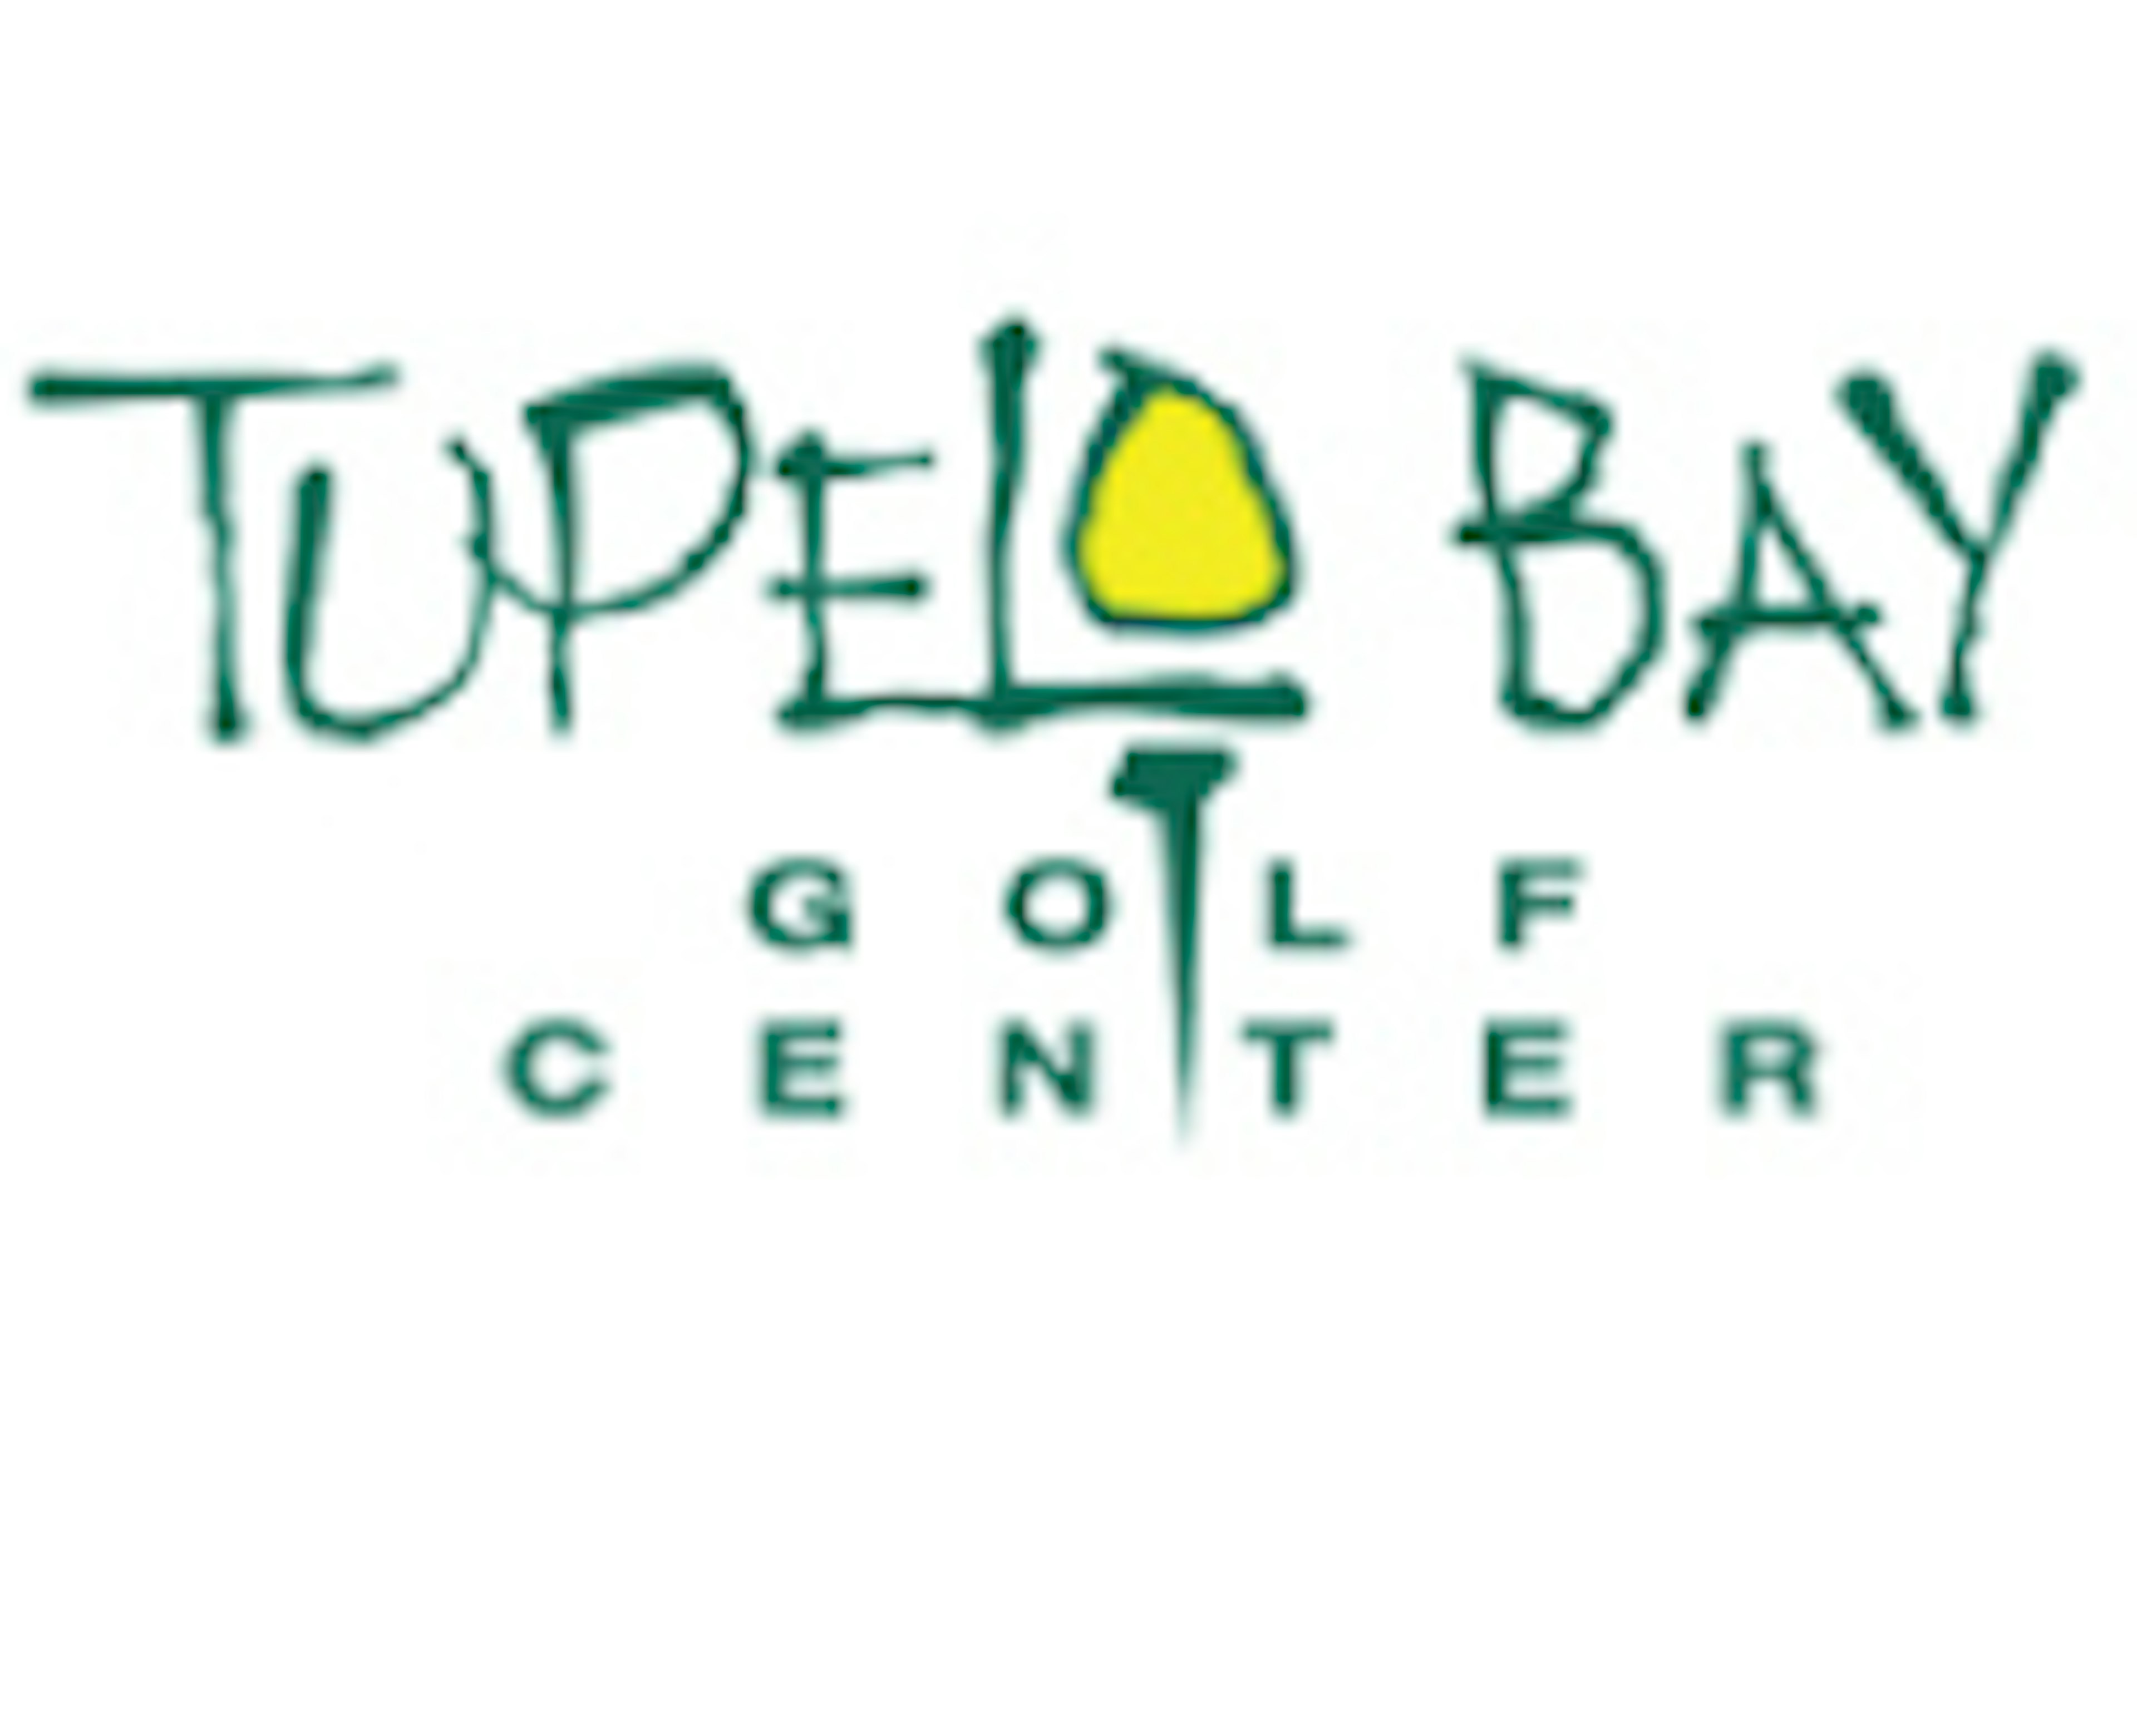 Tupelo Bay Golf